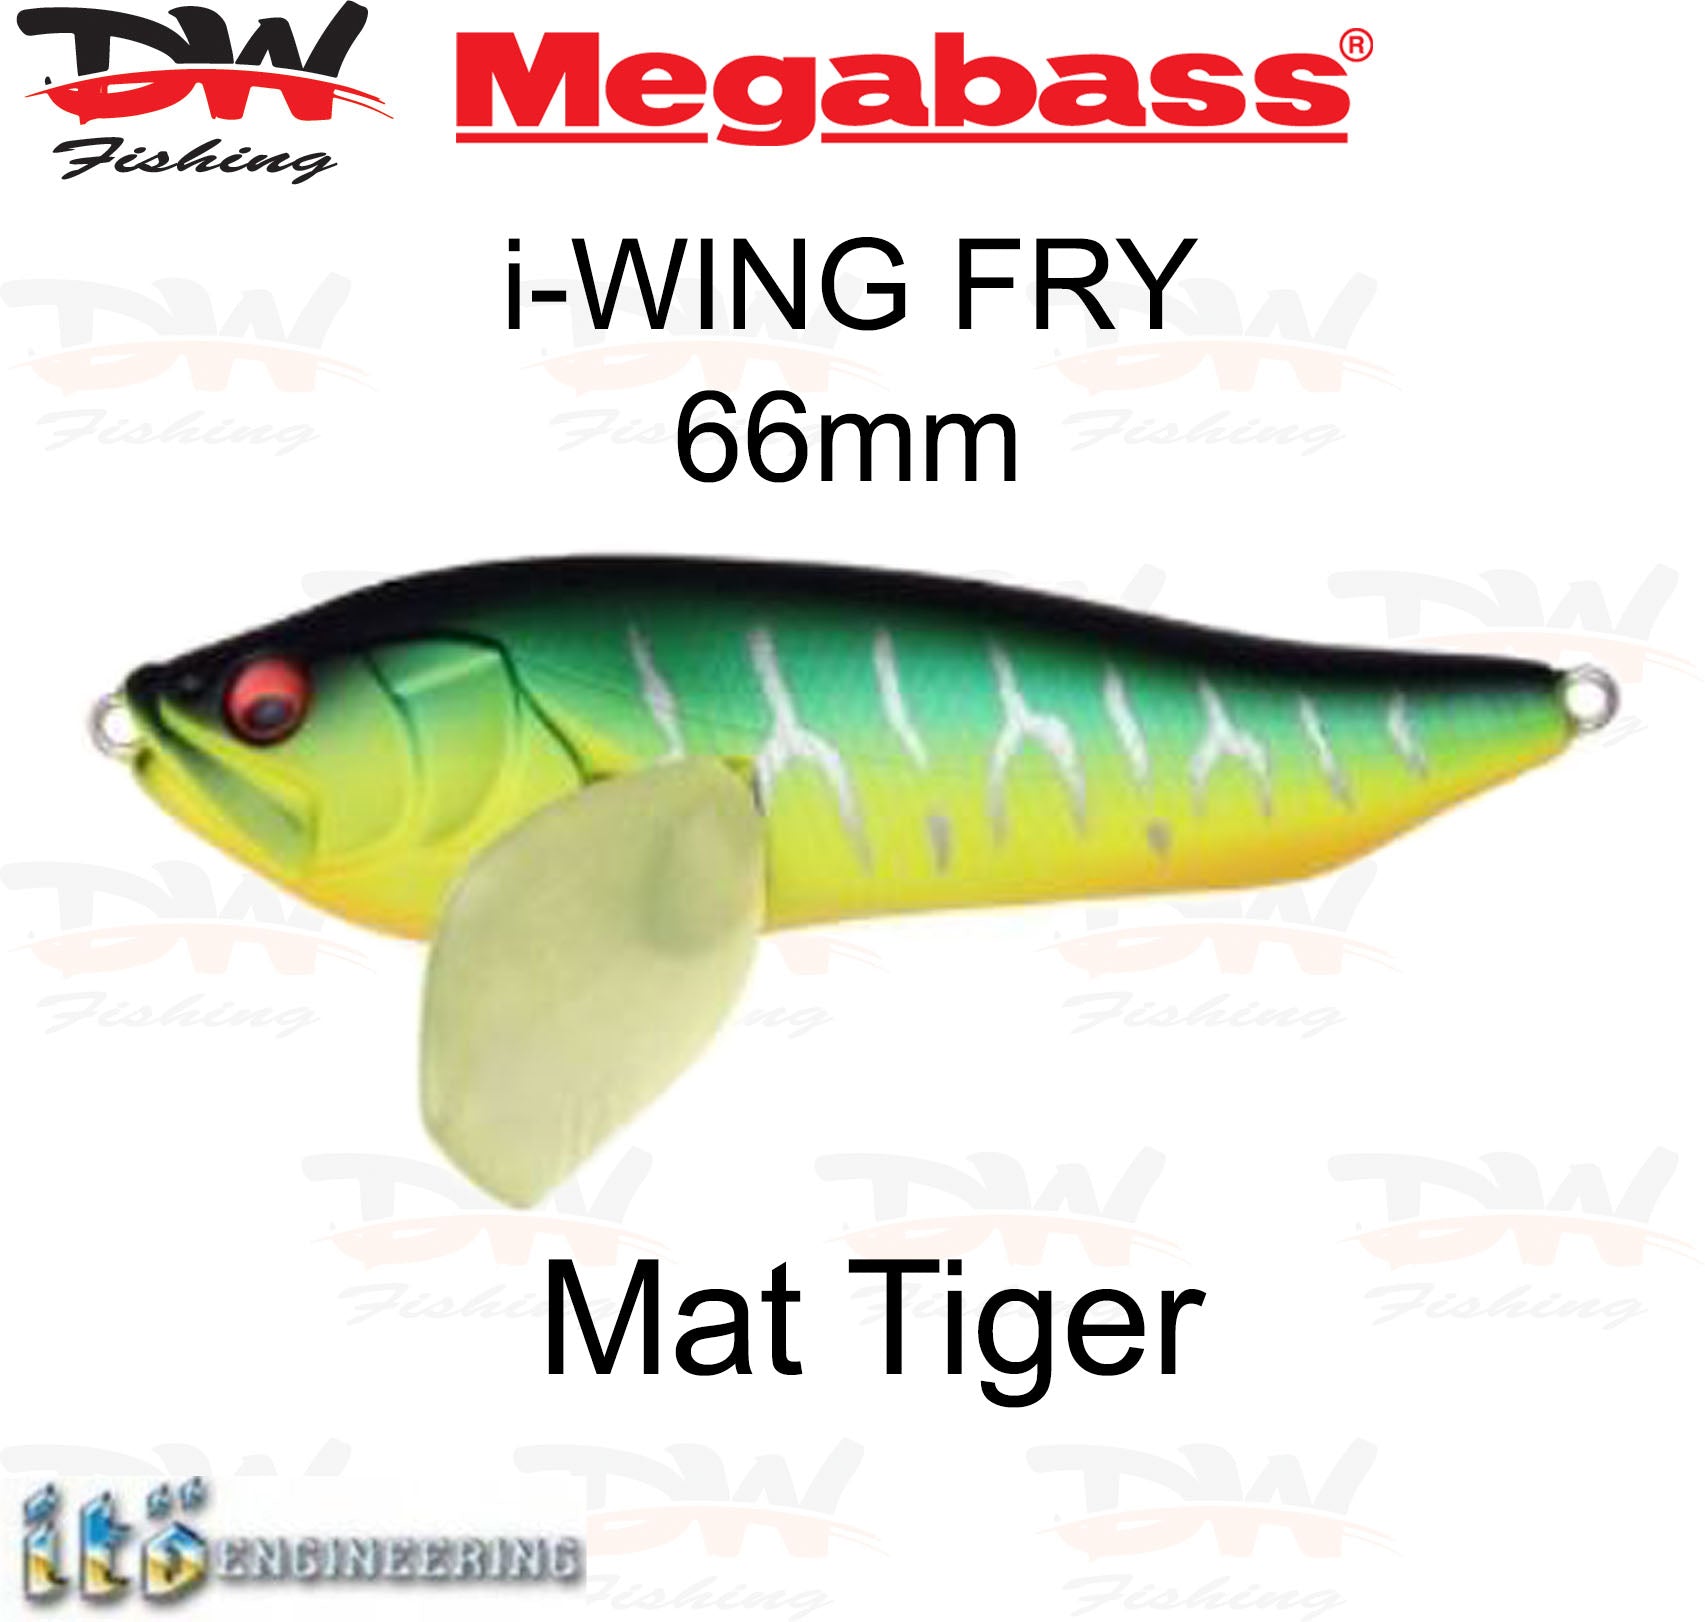 Megabass i-WING FRY surface lure single colour Mat Tiger